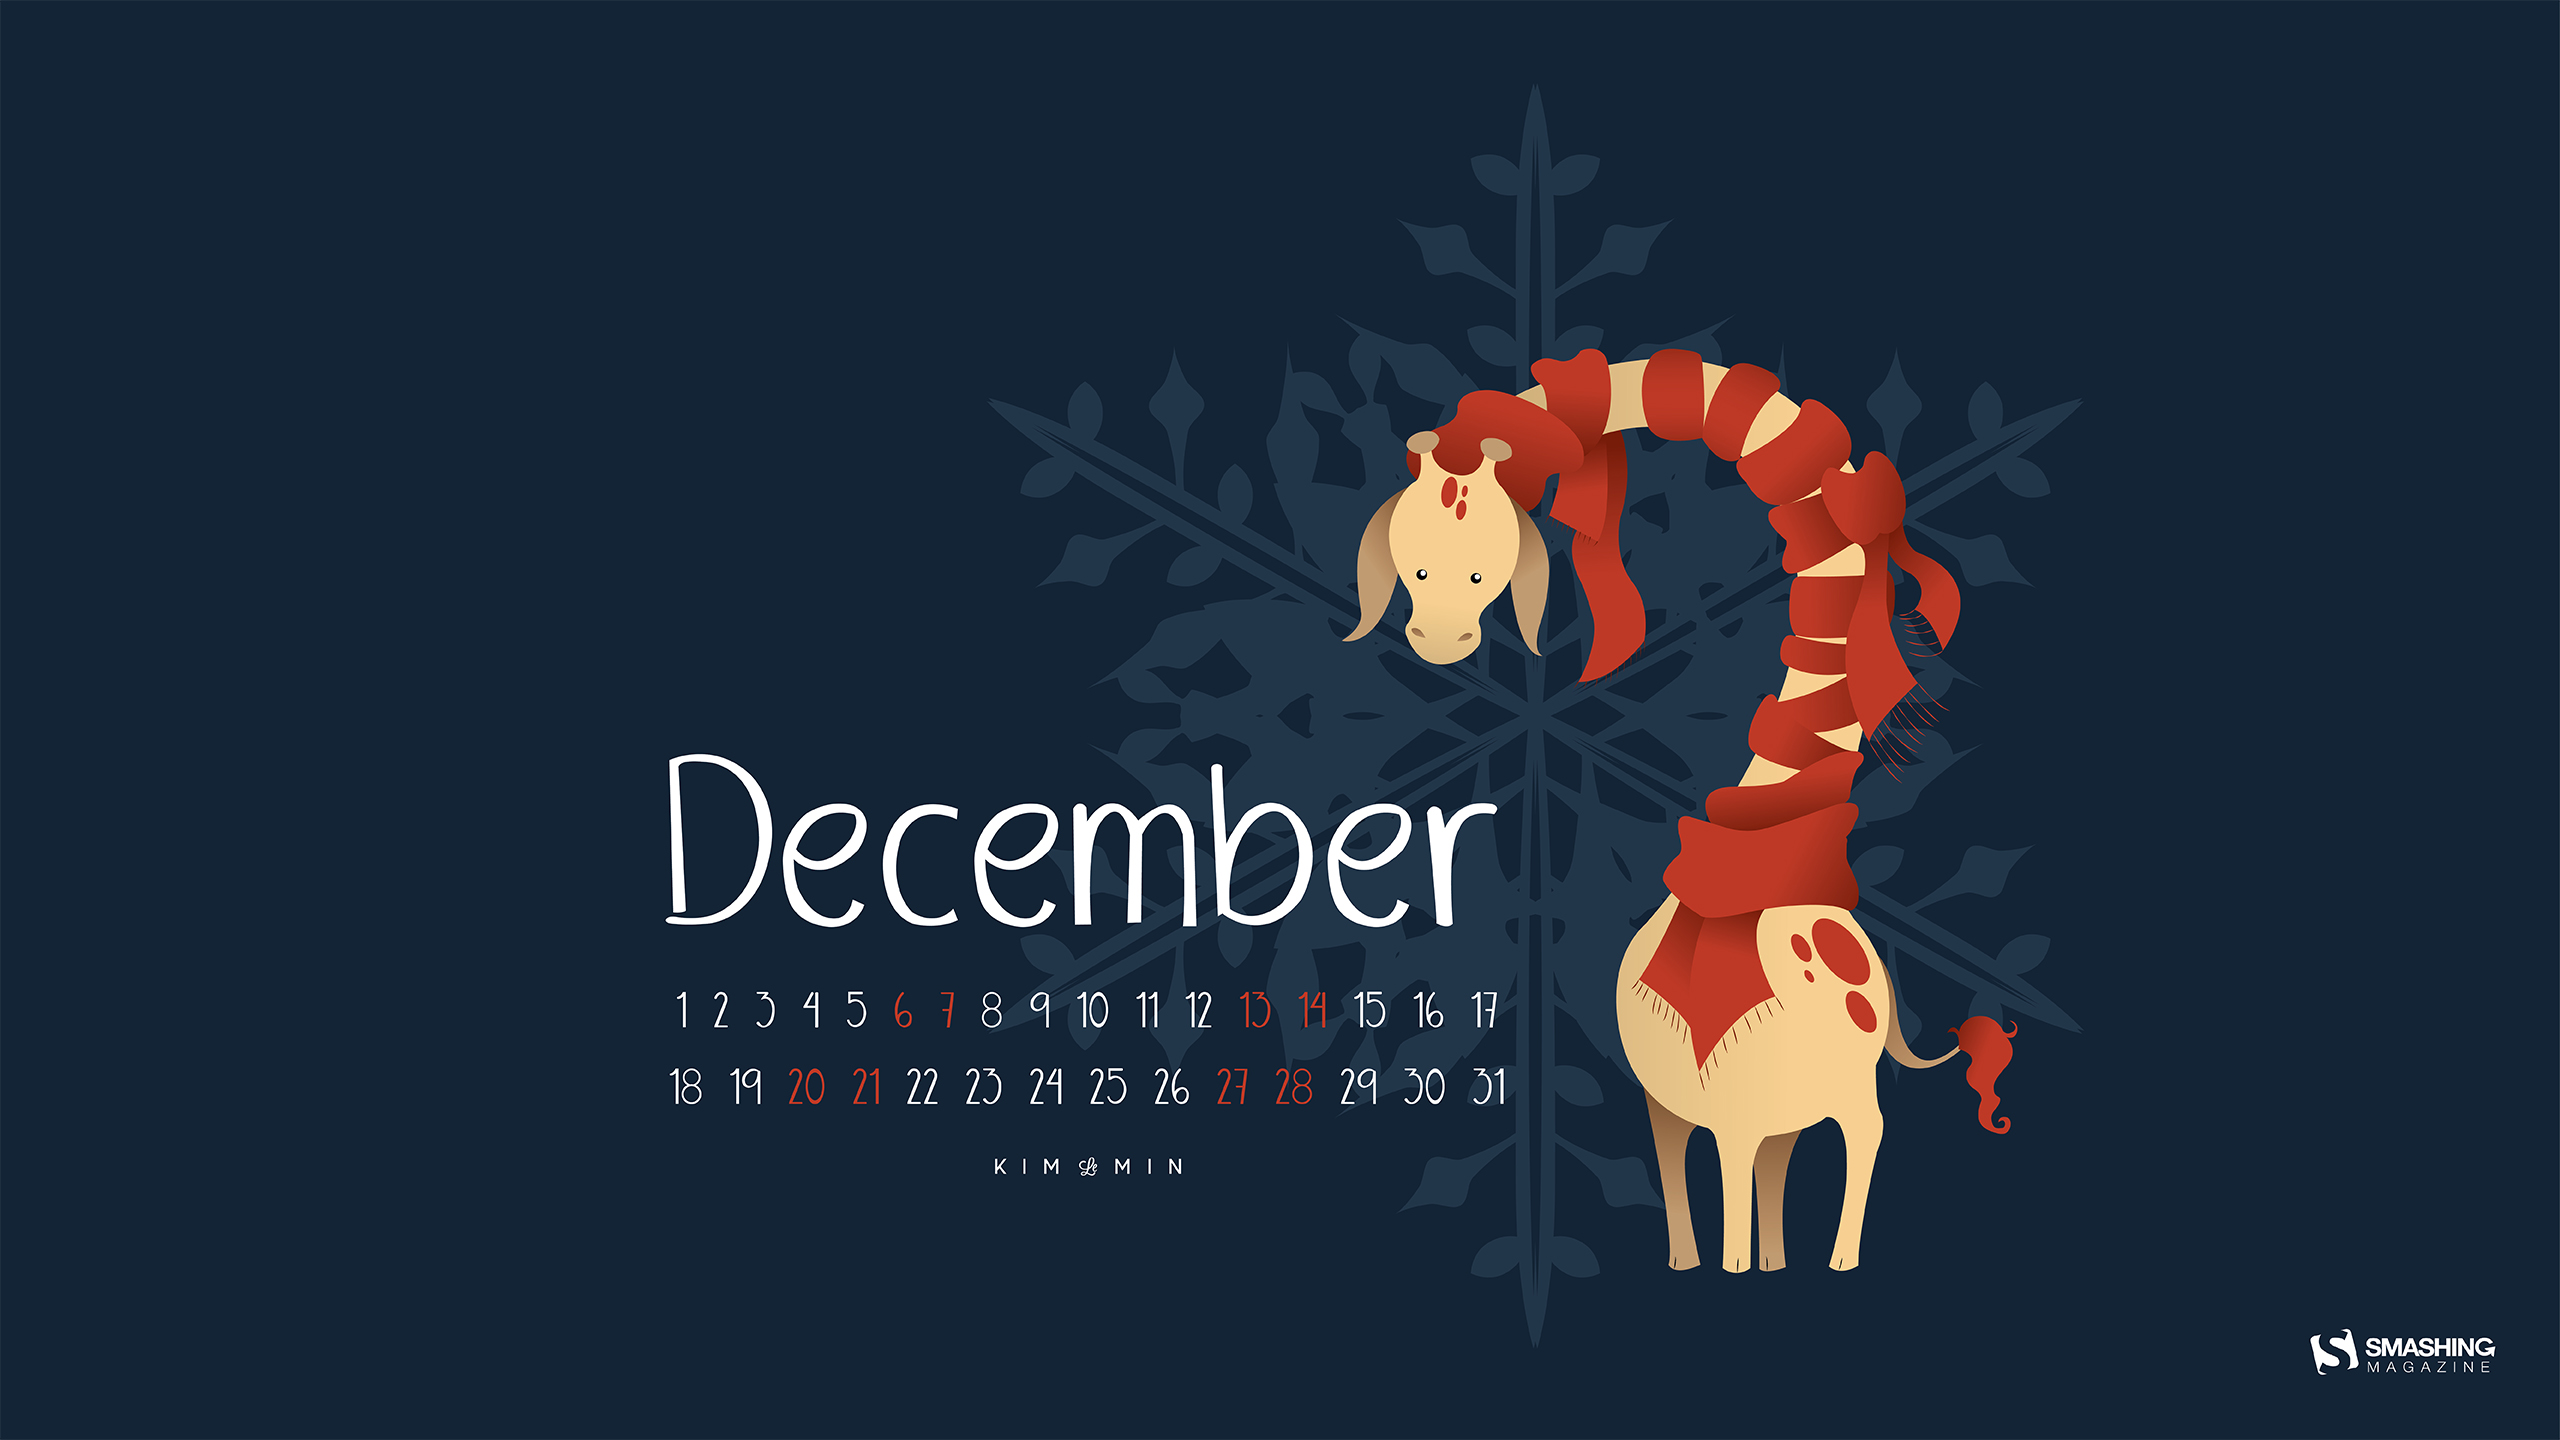 December Wallpaper Calendars For Desktop